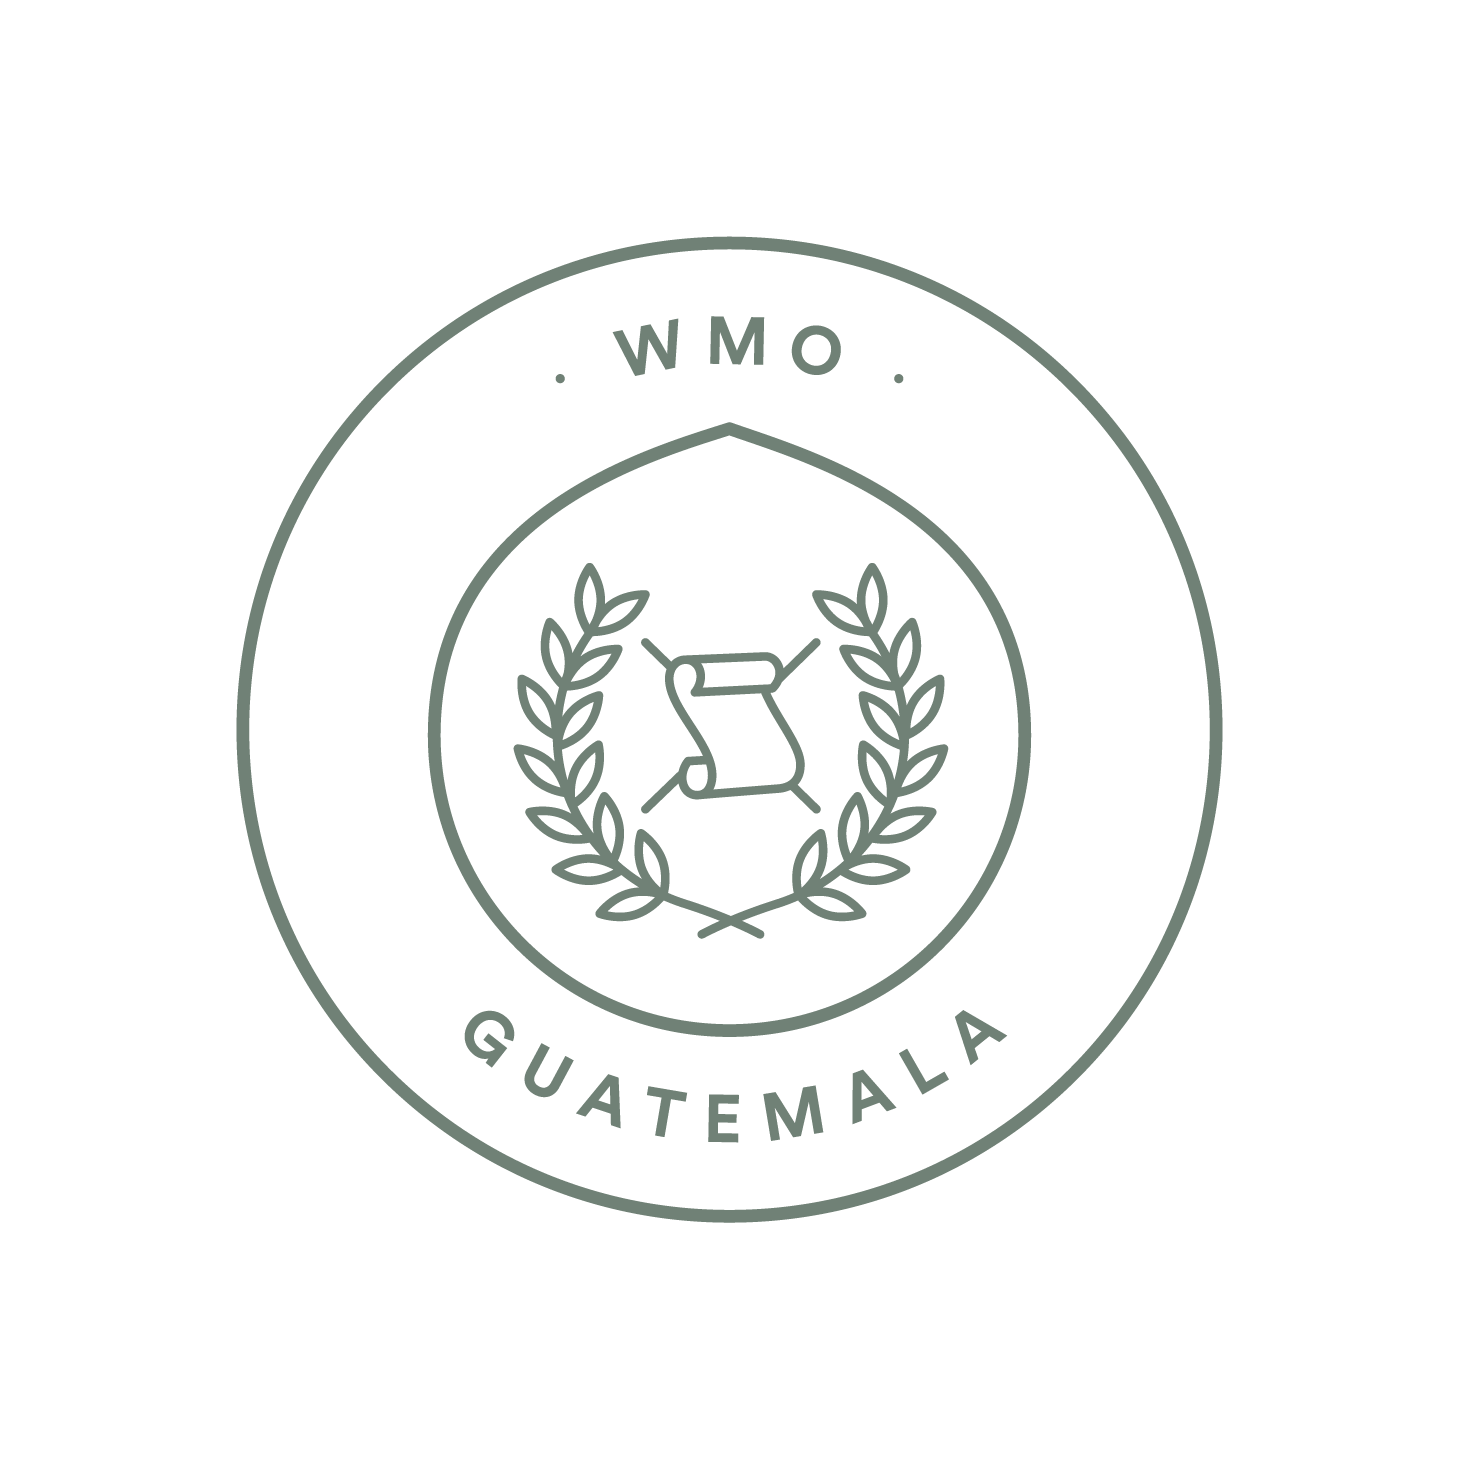 Guatemala World Macadamia Organisation member